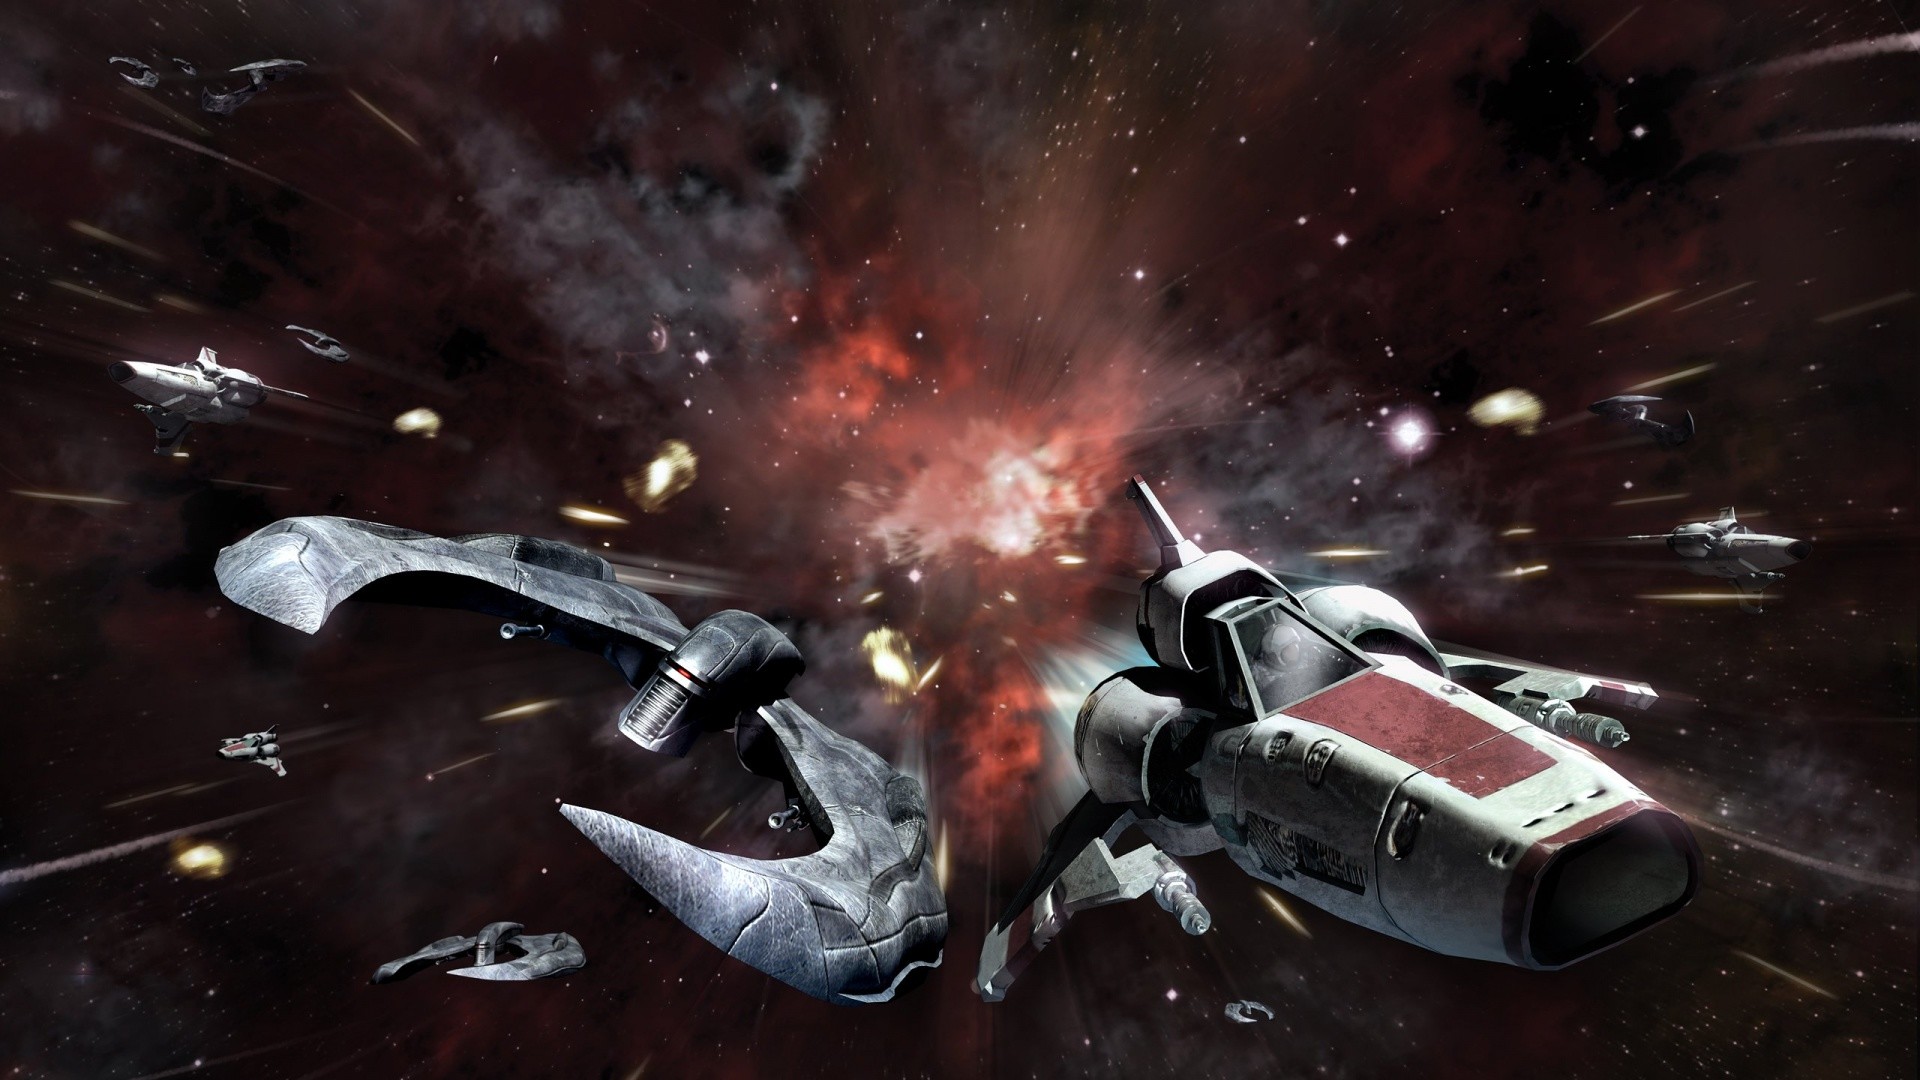 Battlestar Galactica Wallpaper Image